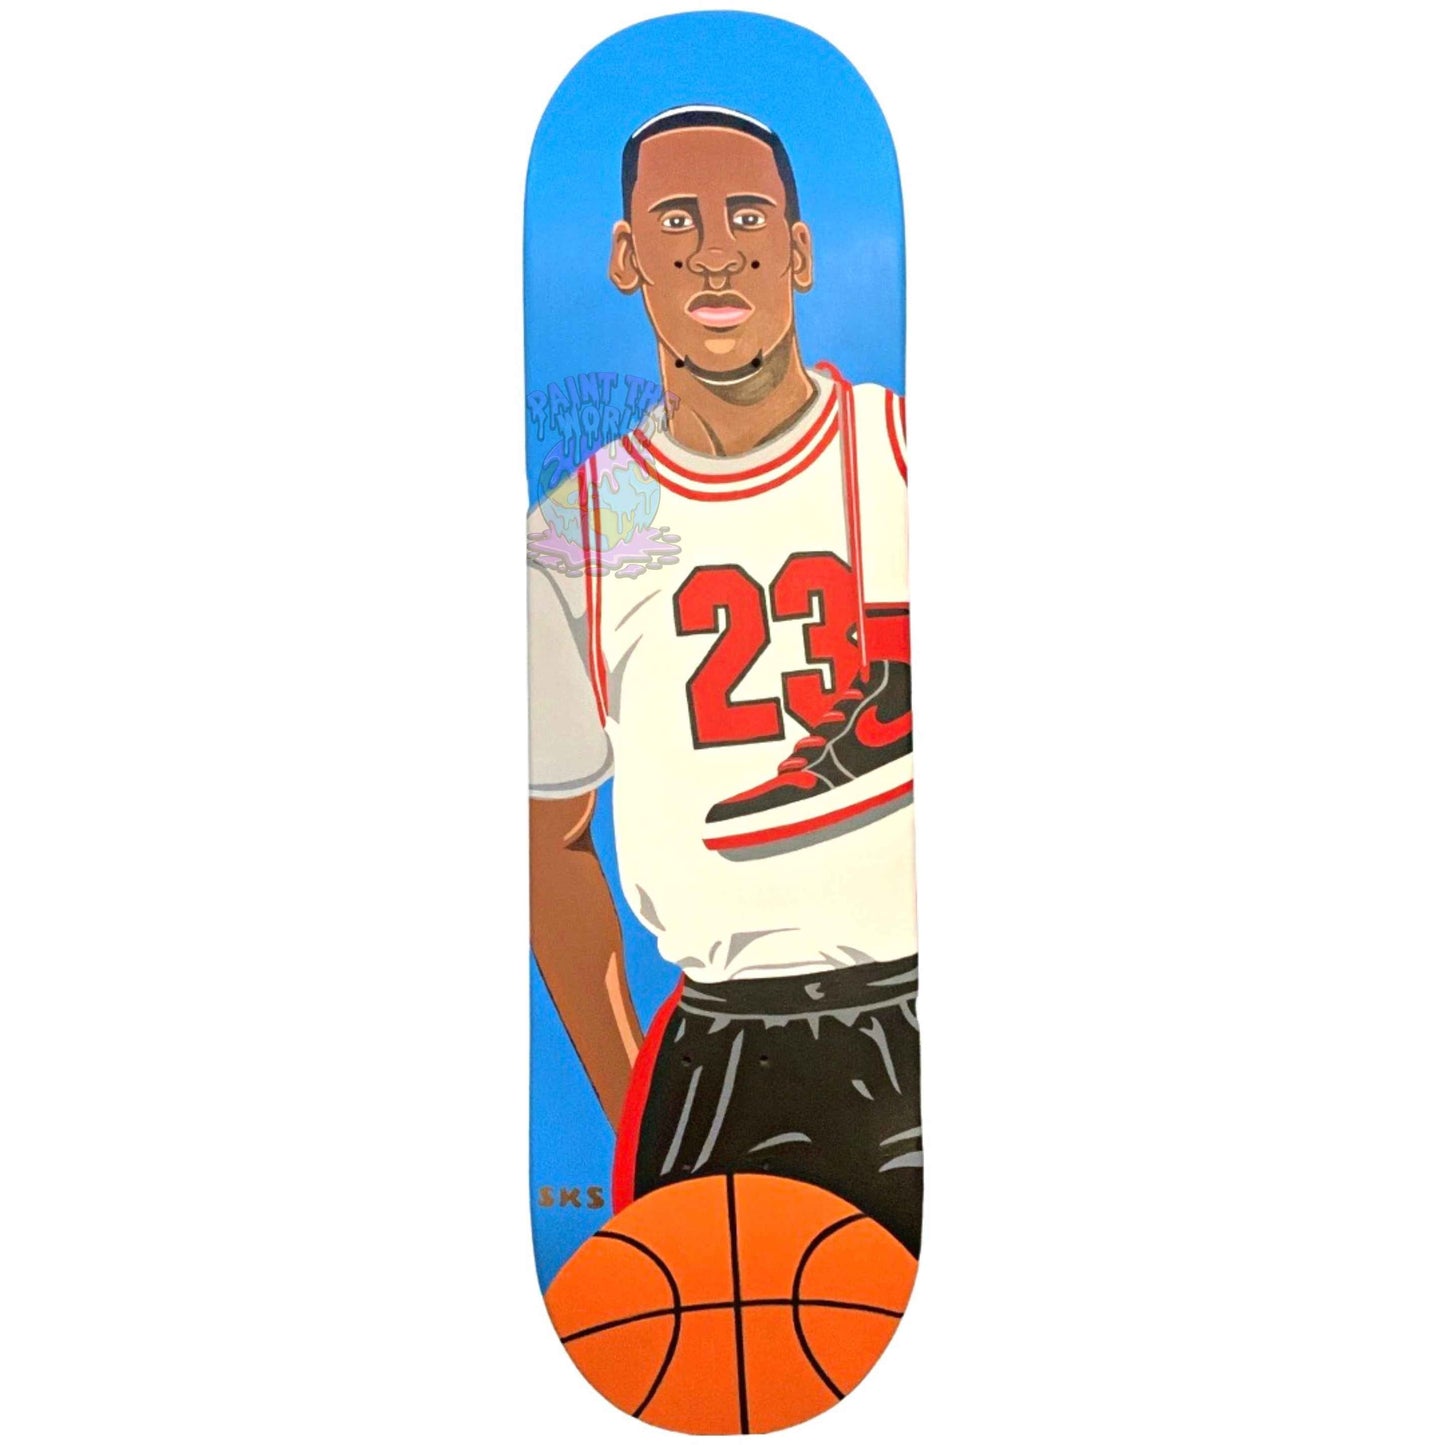 "Young Jumpman" Skateboard Painting